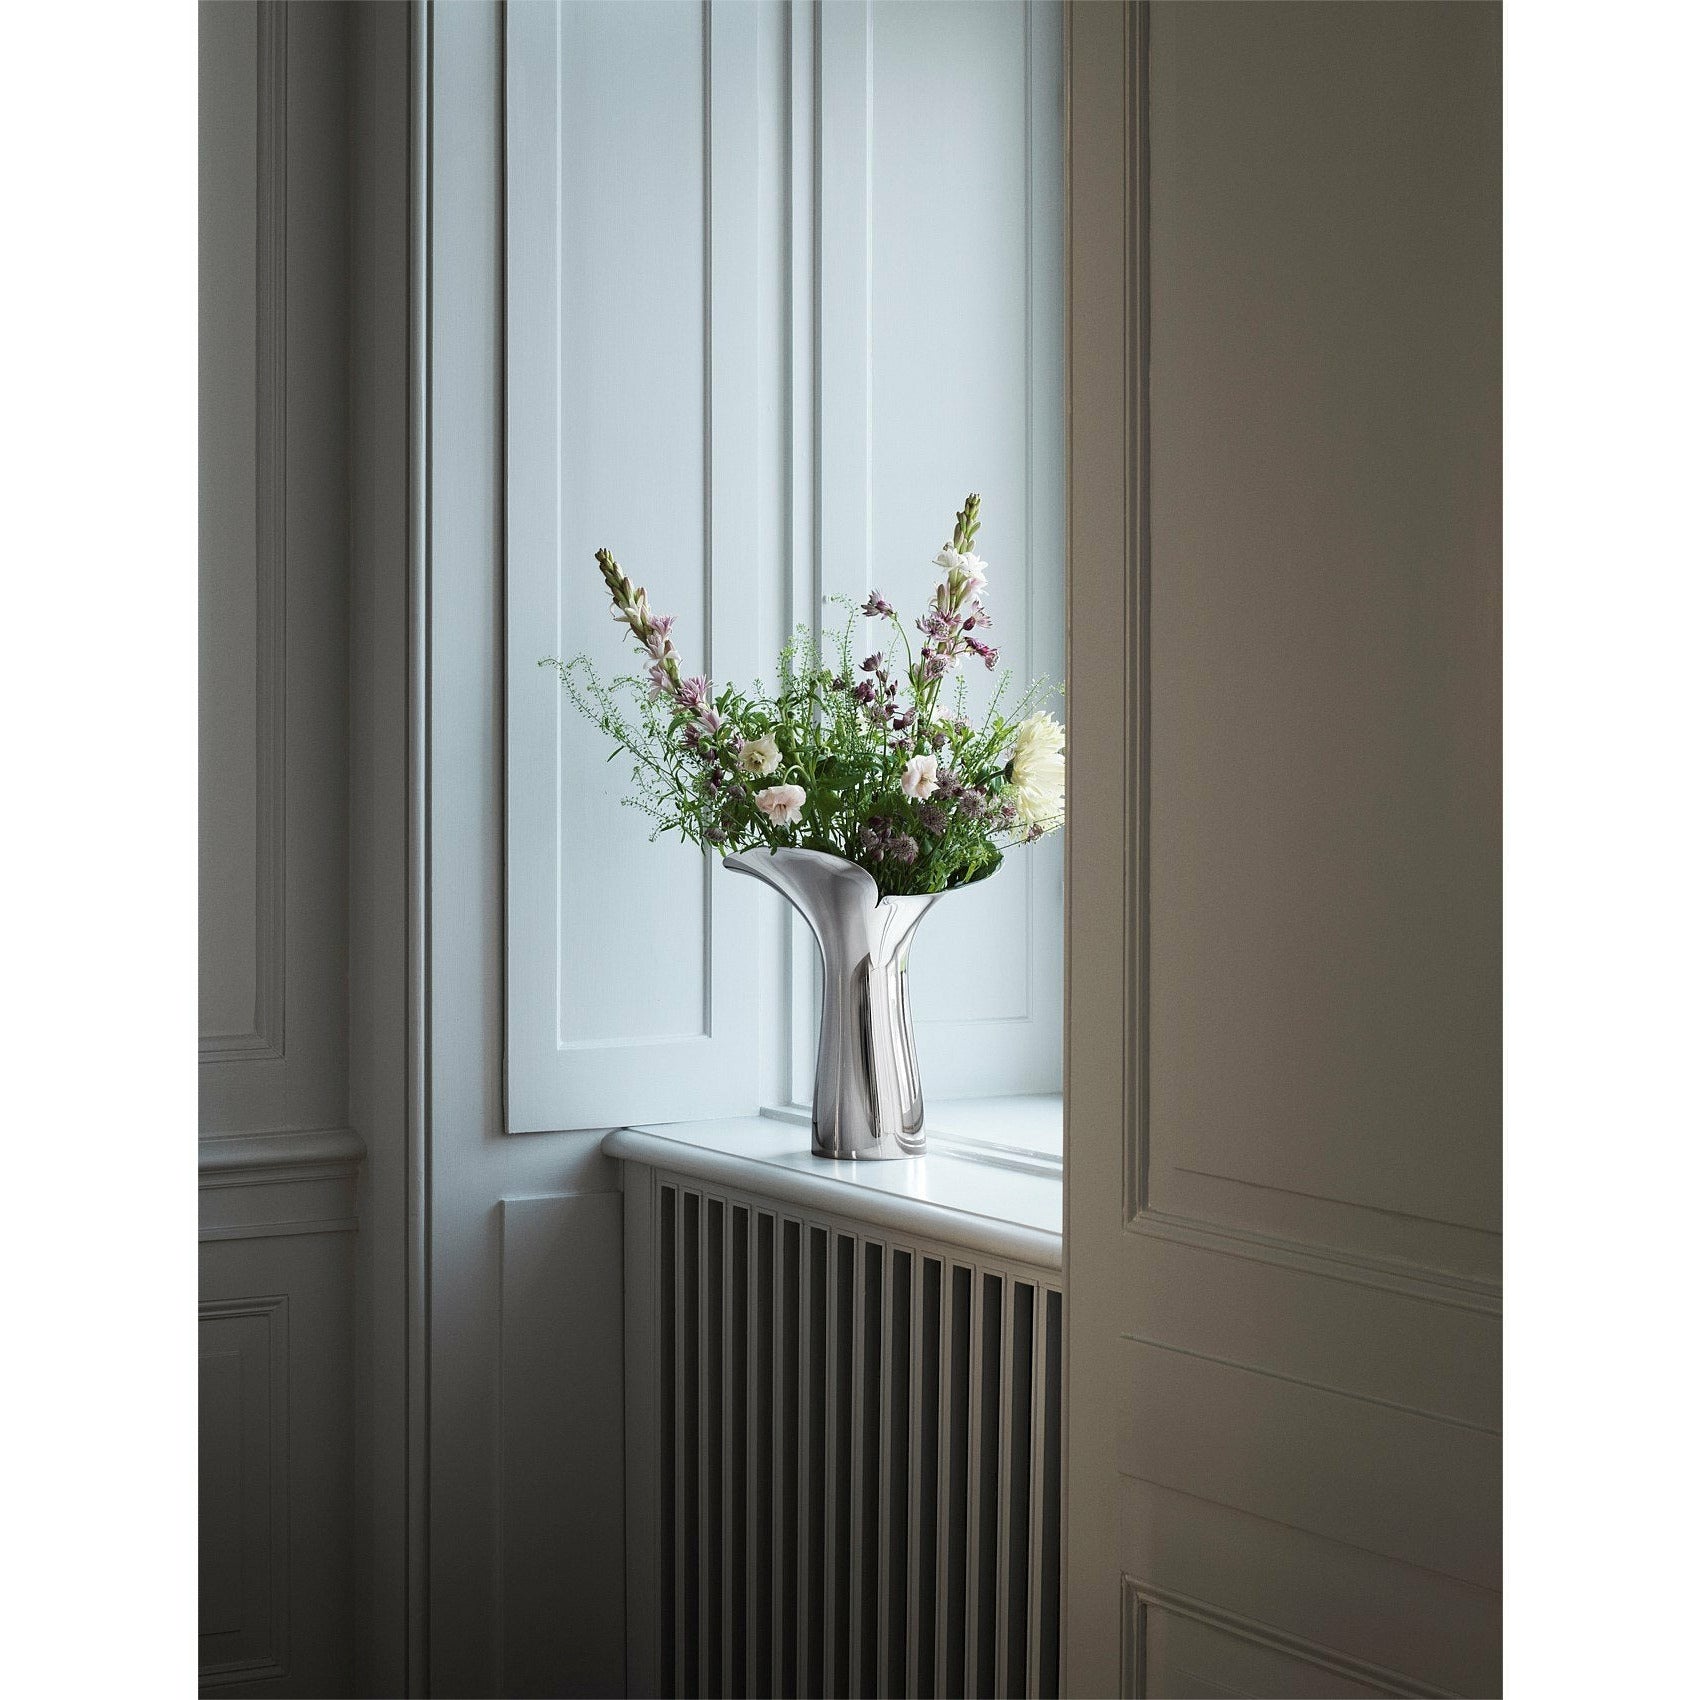 Georg Jensen Bloom Botanica Vase, 220mm